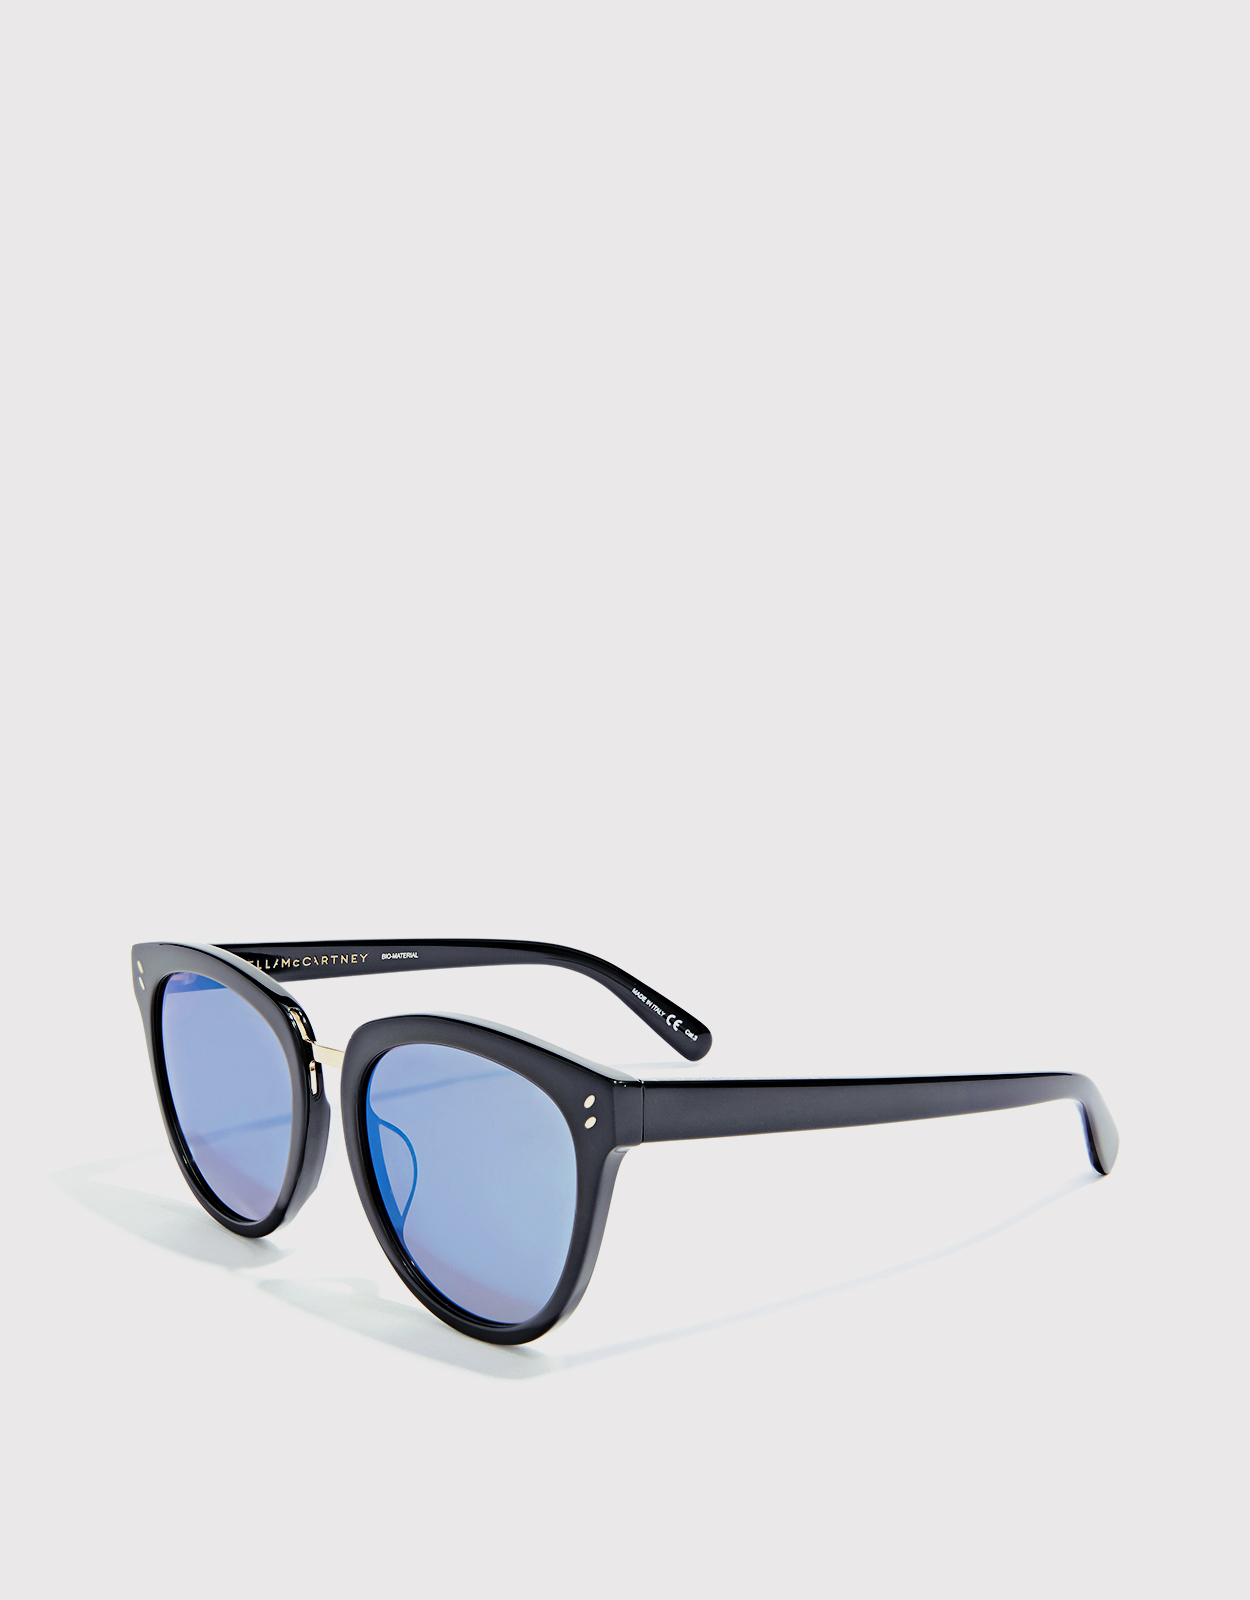 ondsindet tommelfinger Udsæt Stella McCartney Mirrored Cat-eye Sunglasses (Sunglasses,Cat Eye) IFCHIC.COM